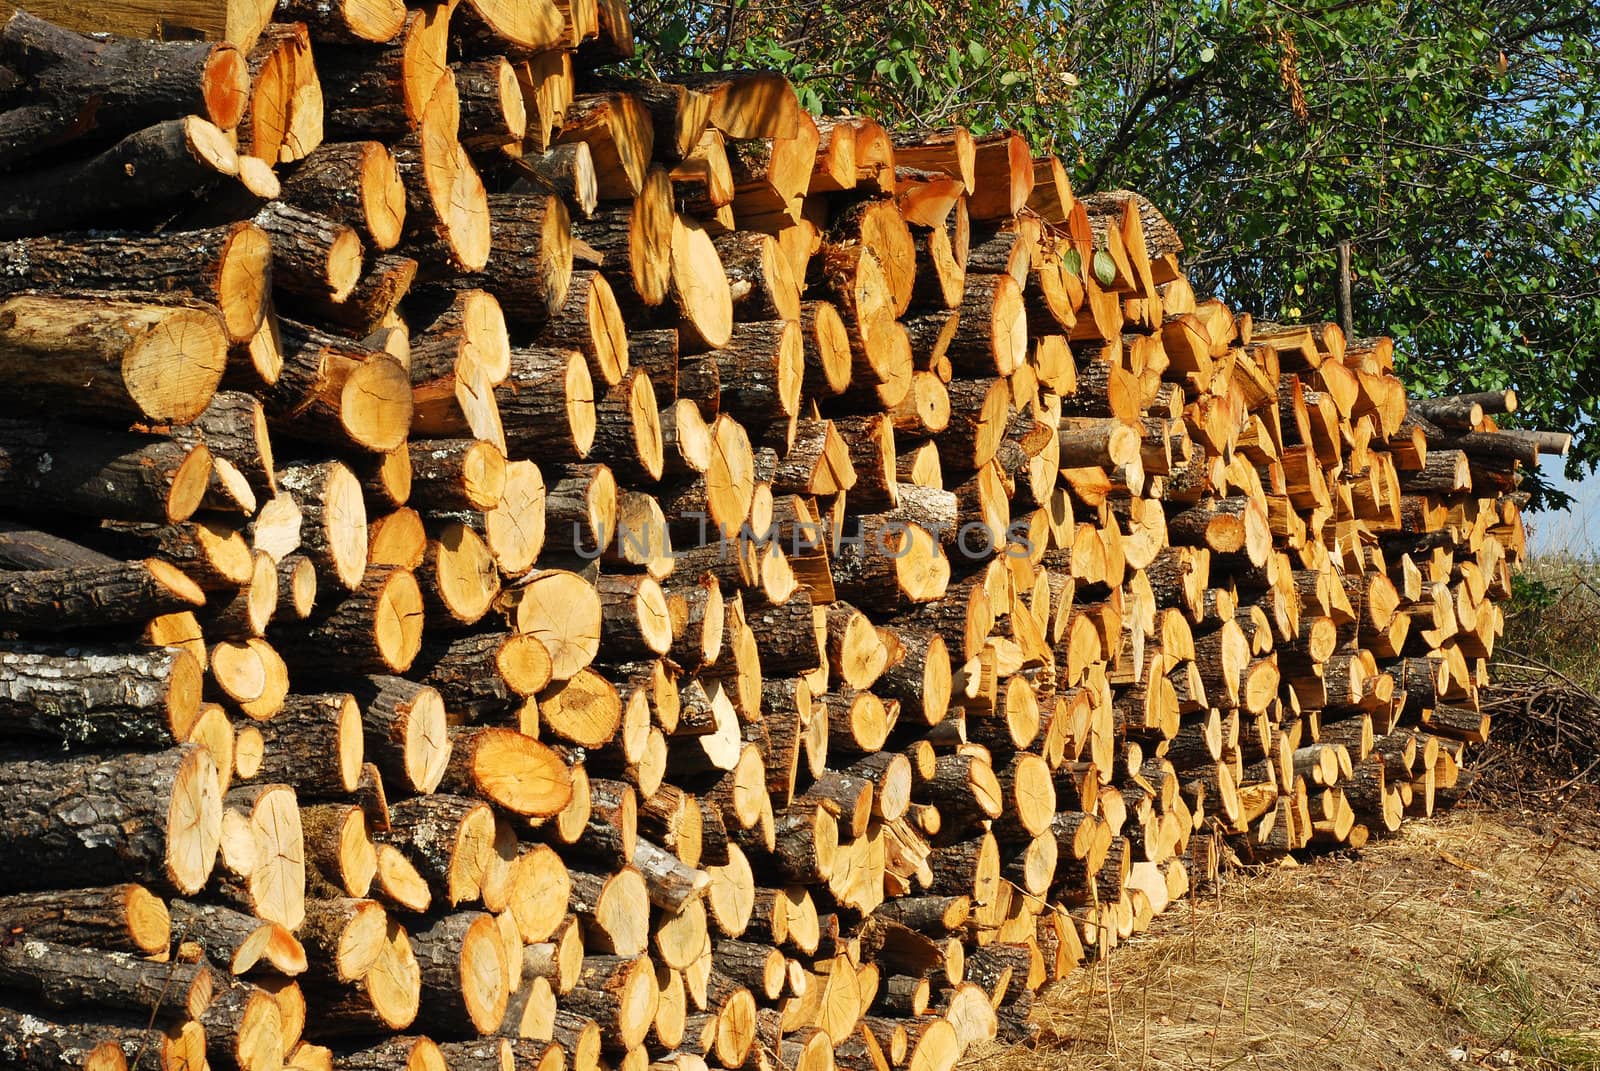 Stacked oak firewood heap in countryside garden in perspective